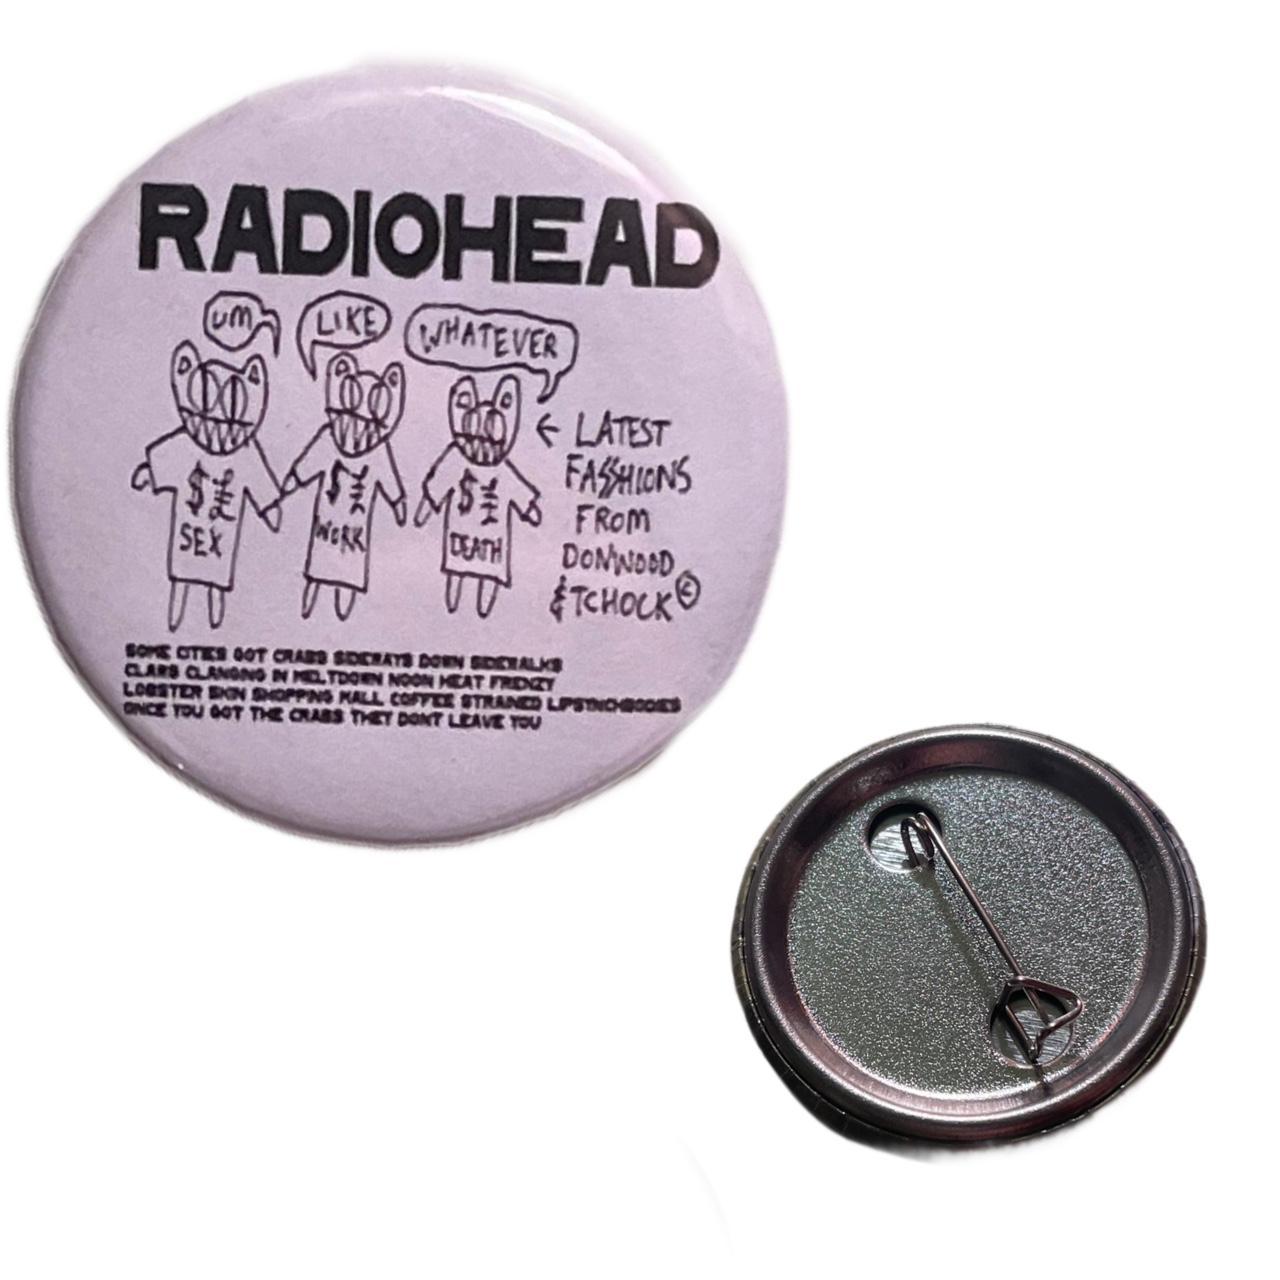 radiohead latest fashions pin! handmade by me:)